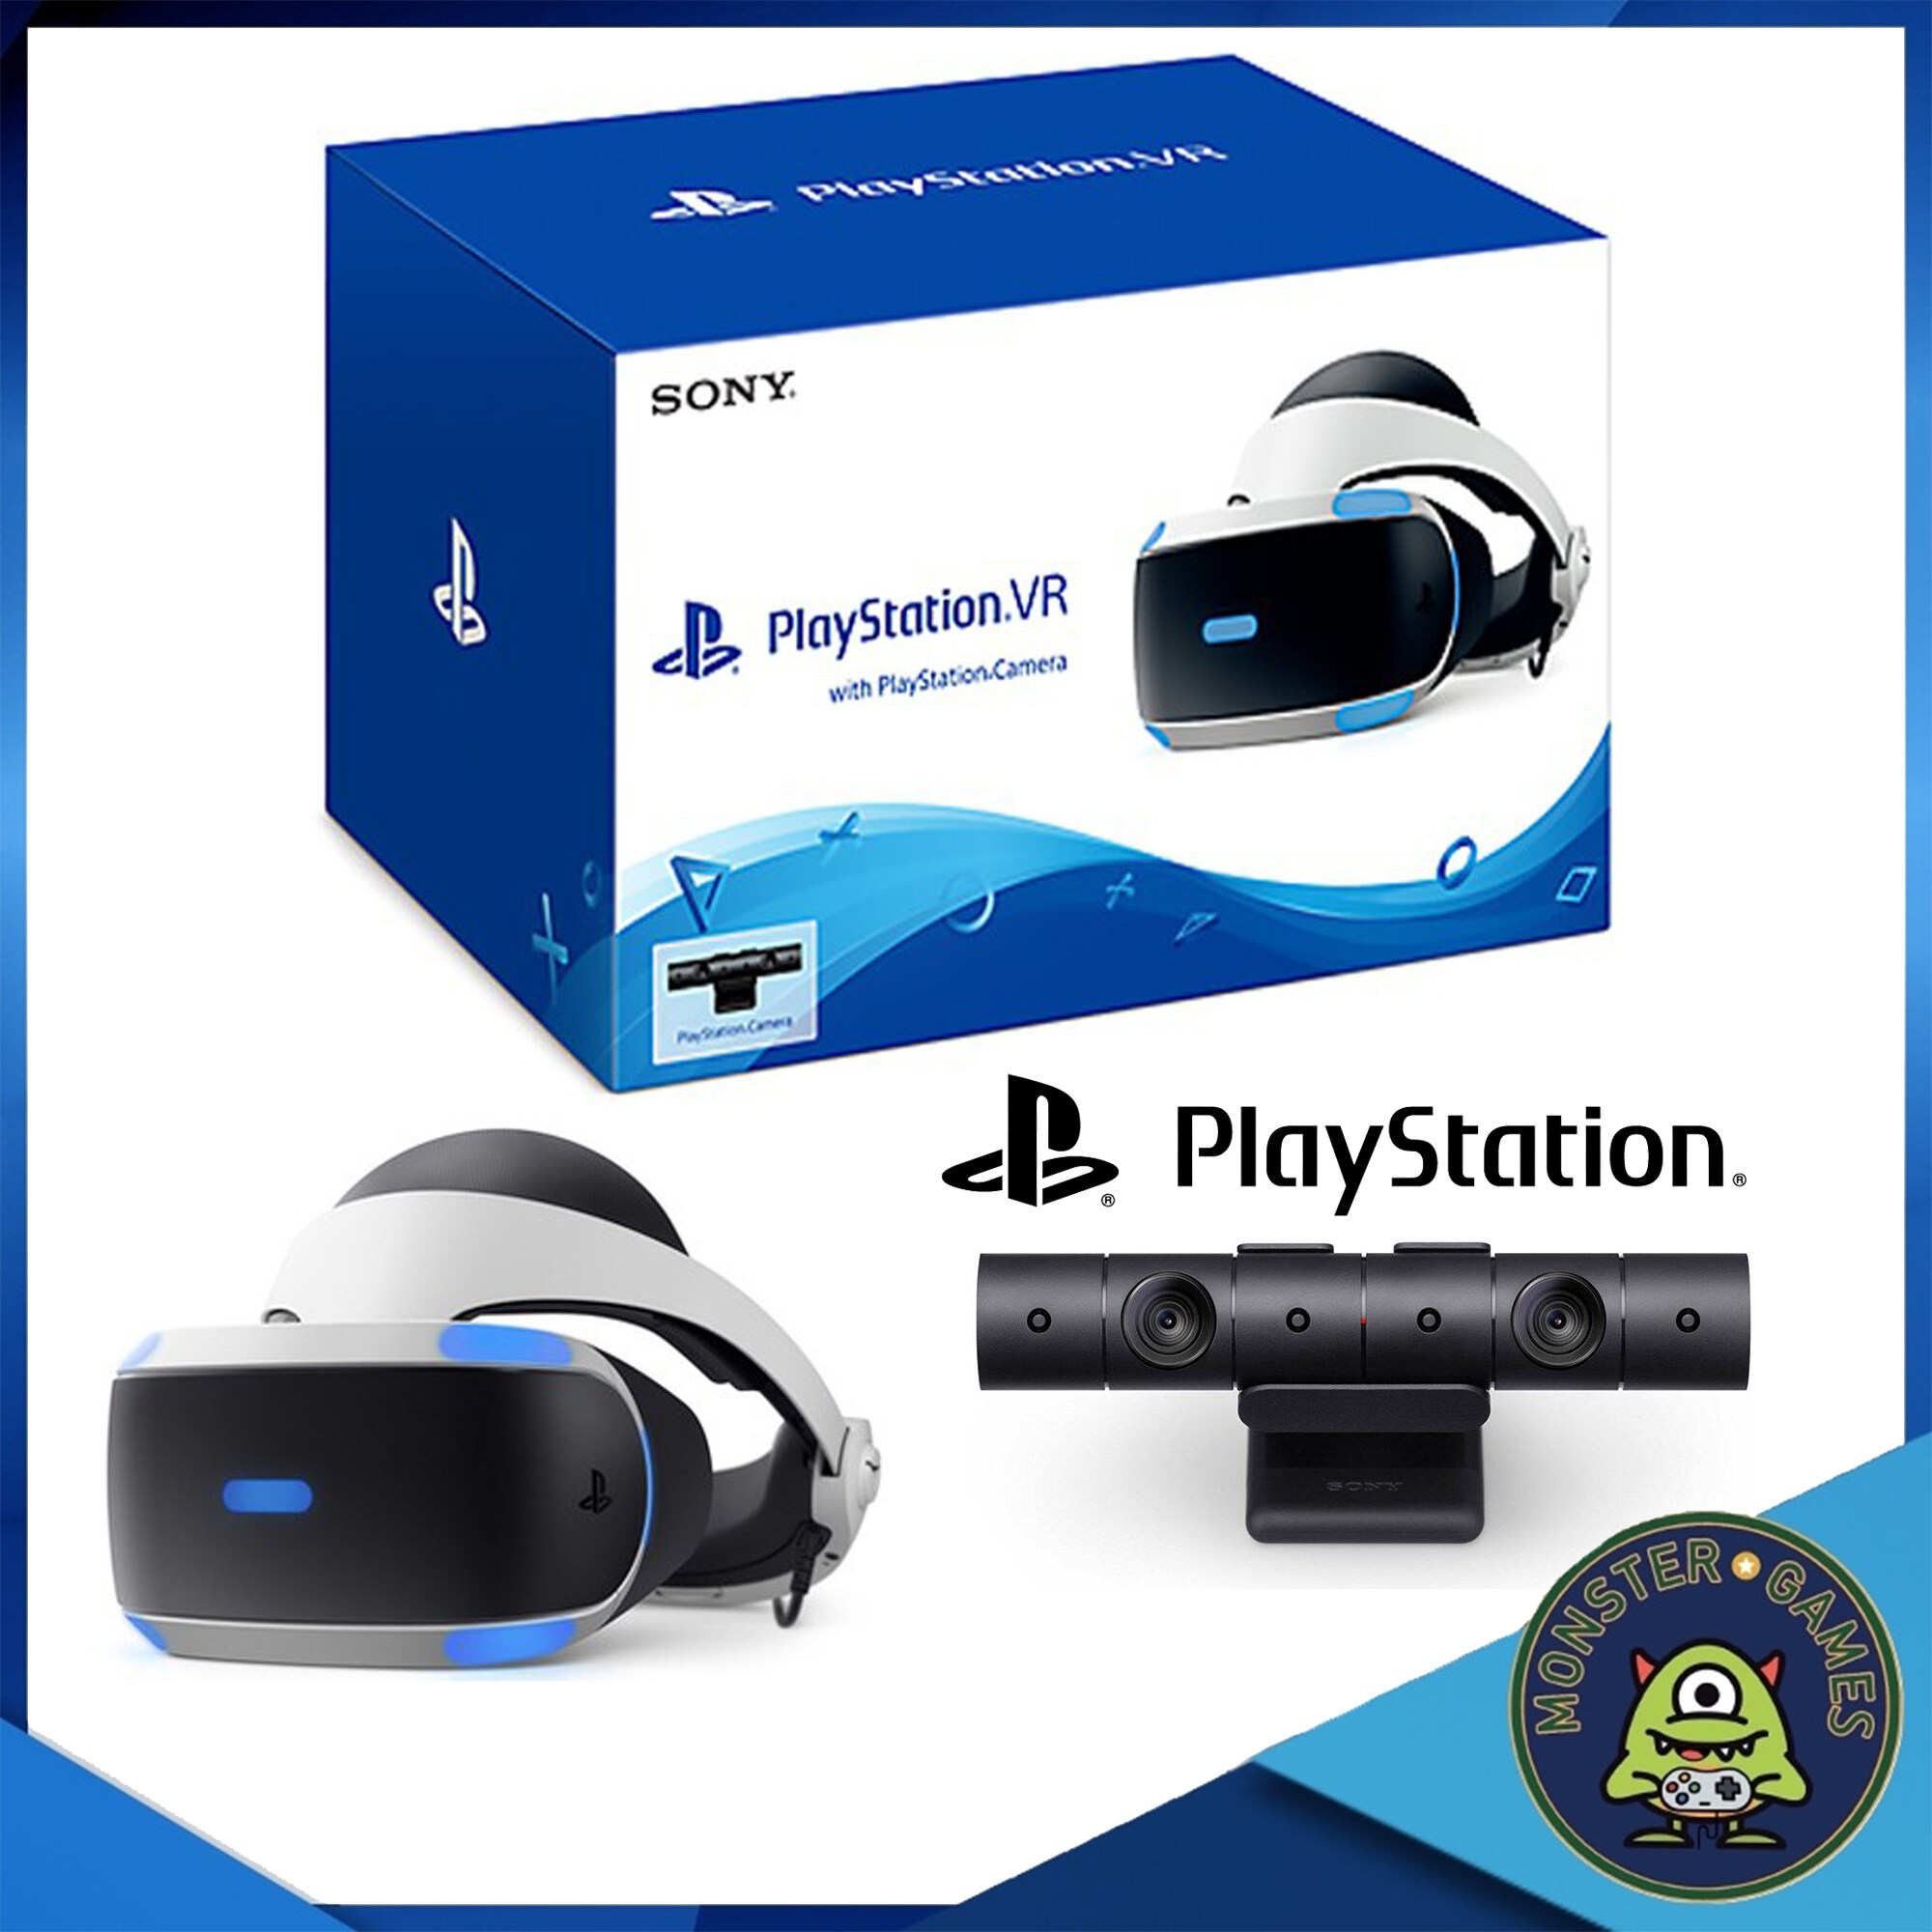 Ps4 VR Set + Ps4 Camera ของแท้ประกันศูนย์ Sony ไทย 1 ปี (VR Ps4 พร้อมกล้องPs4)(VR Ps4)(แว่น Vr ps4)(กล้อง Vr ps4)(Playstation4 VR)